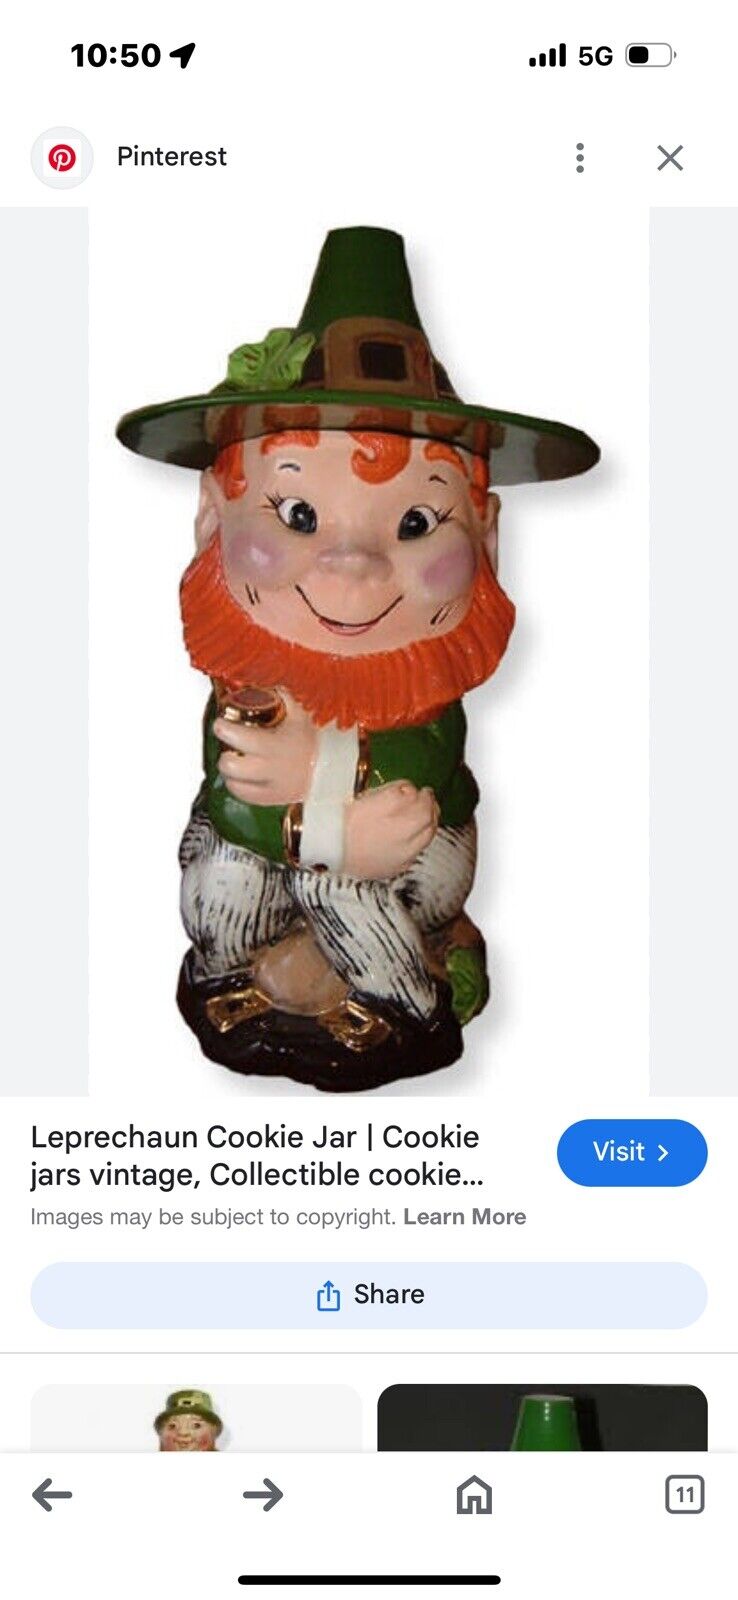 Leprechaun Cookie Jar vintage